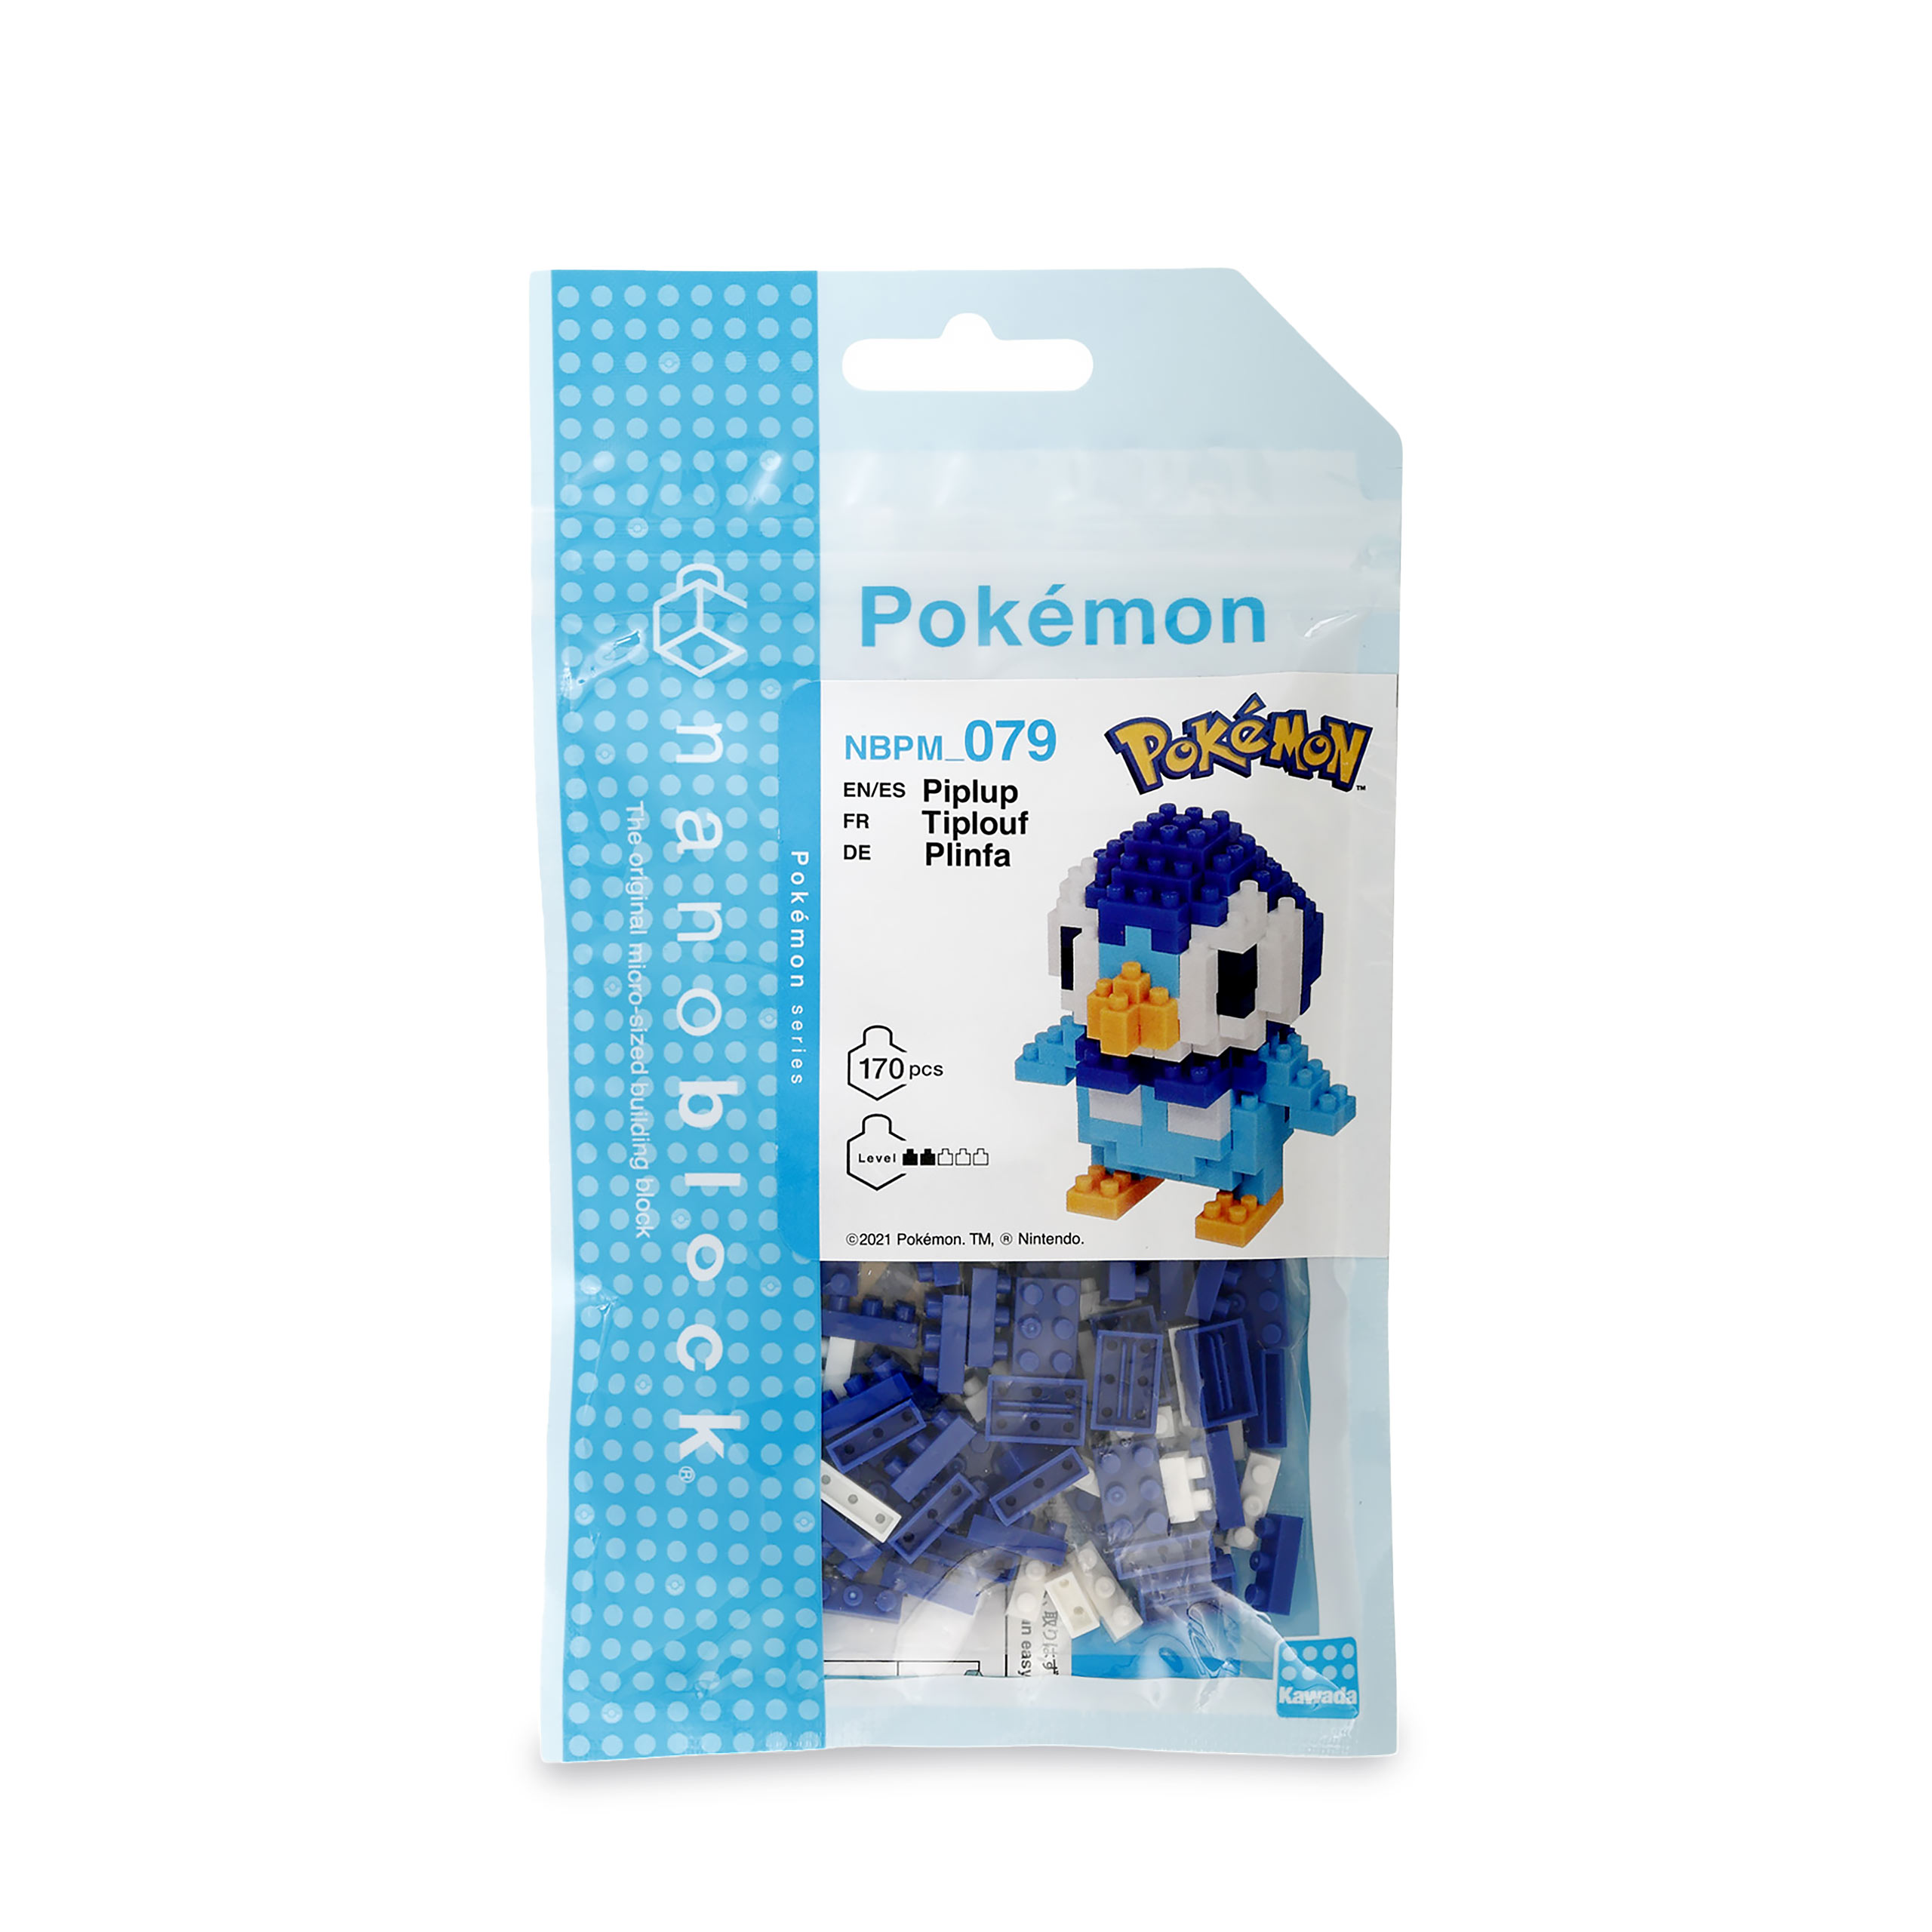 Pokemon - Plinfa nanoblock Mini Baustein Figur